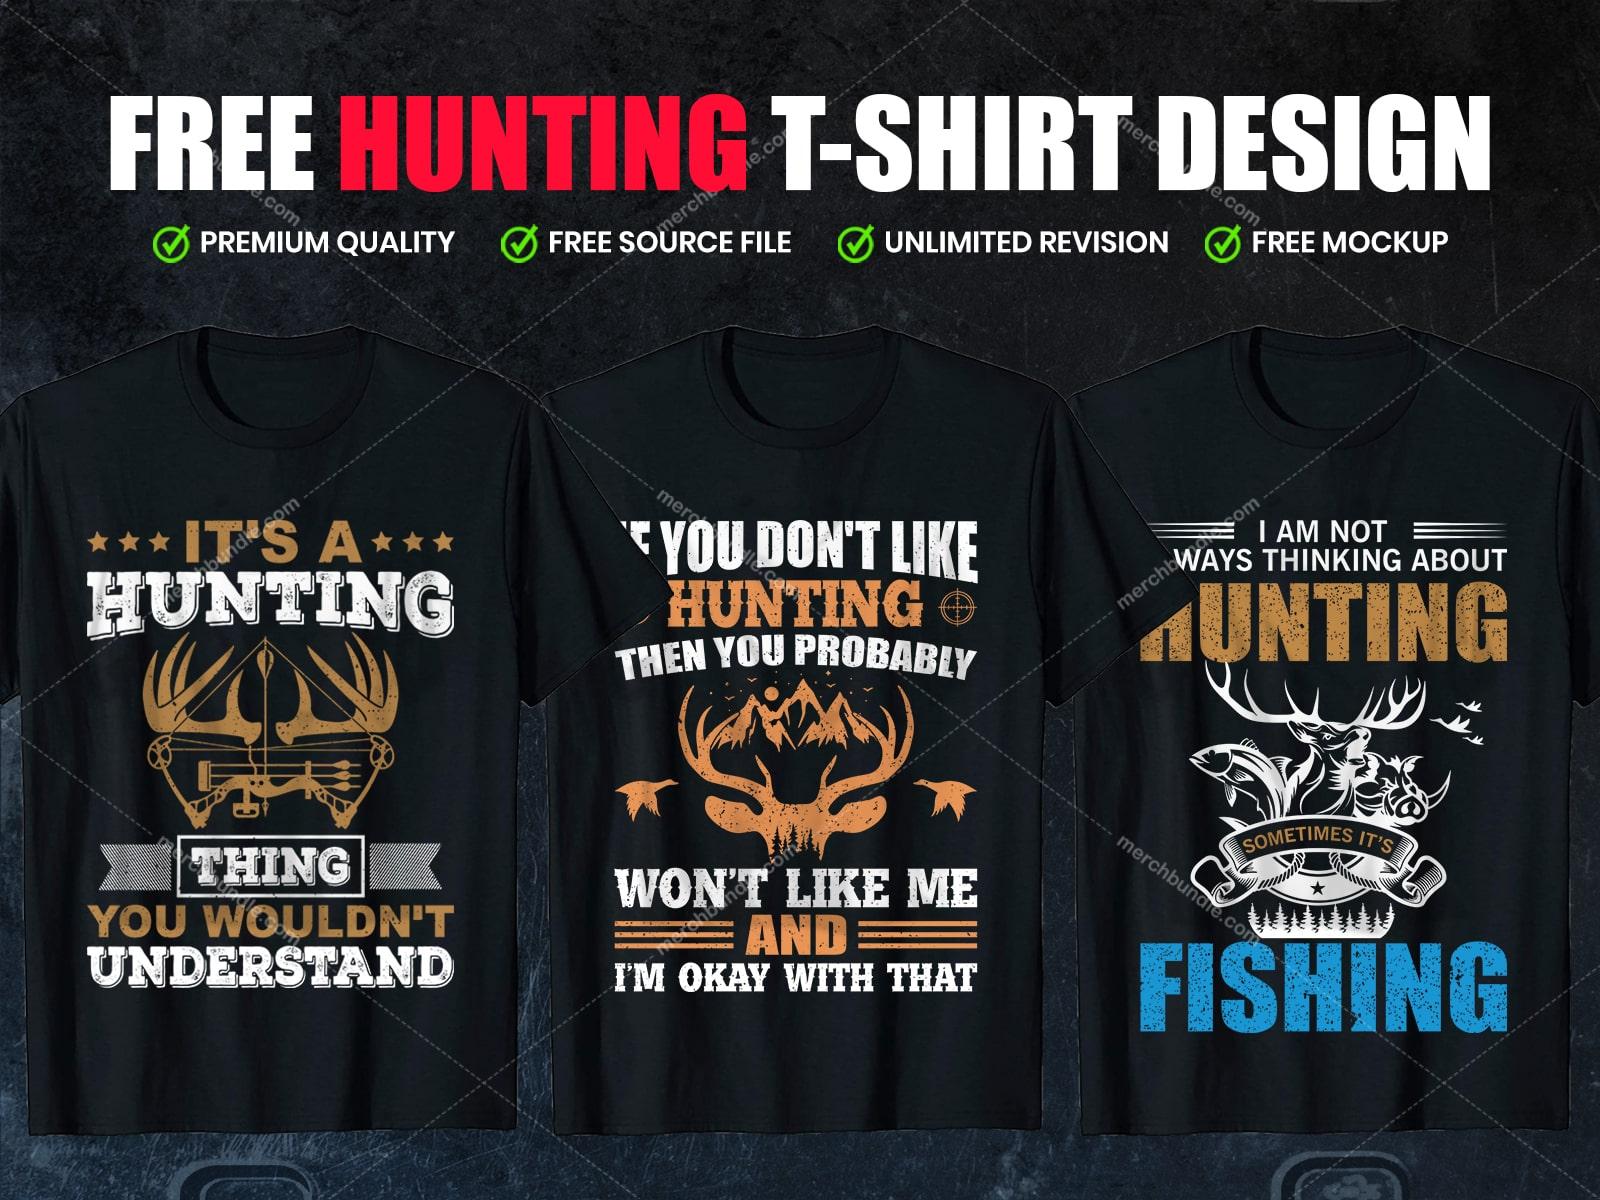 Free hunting t shirt design1